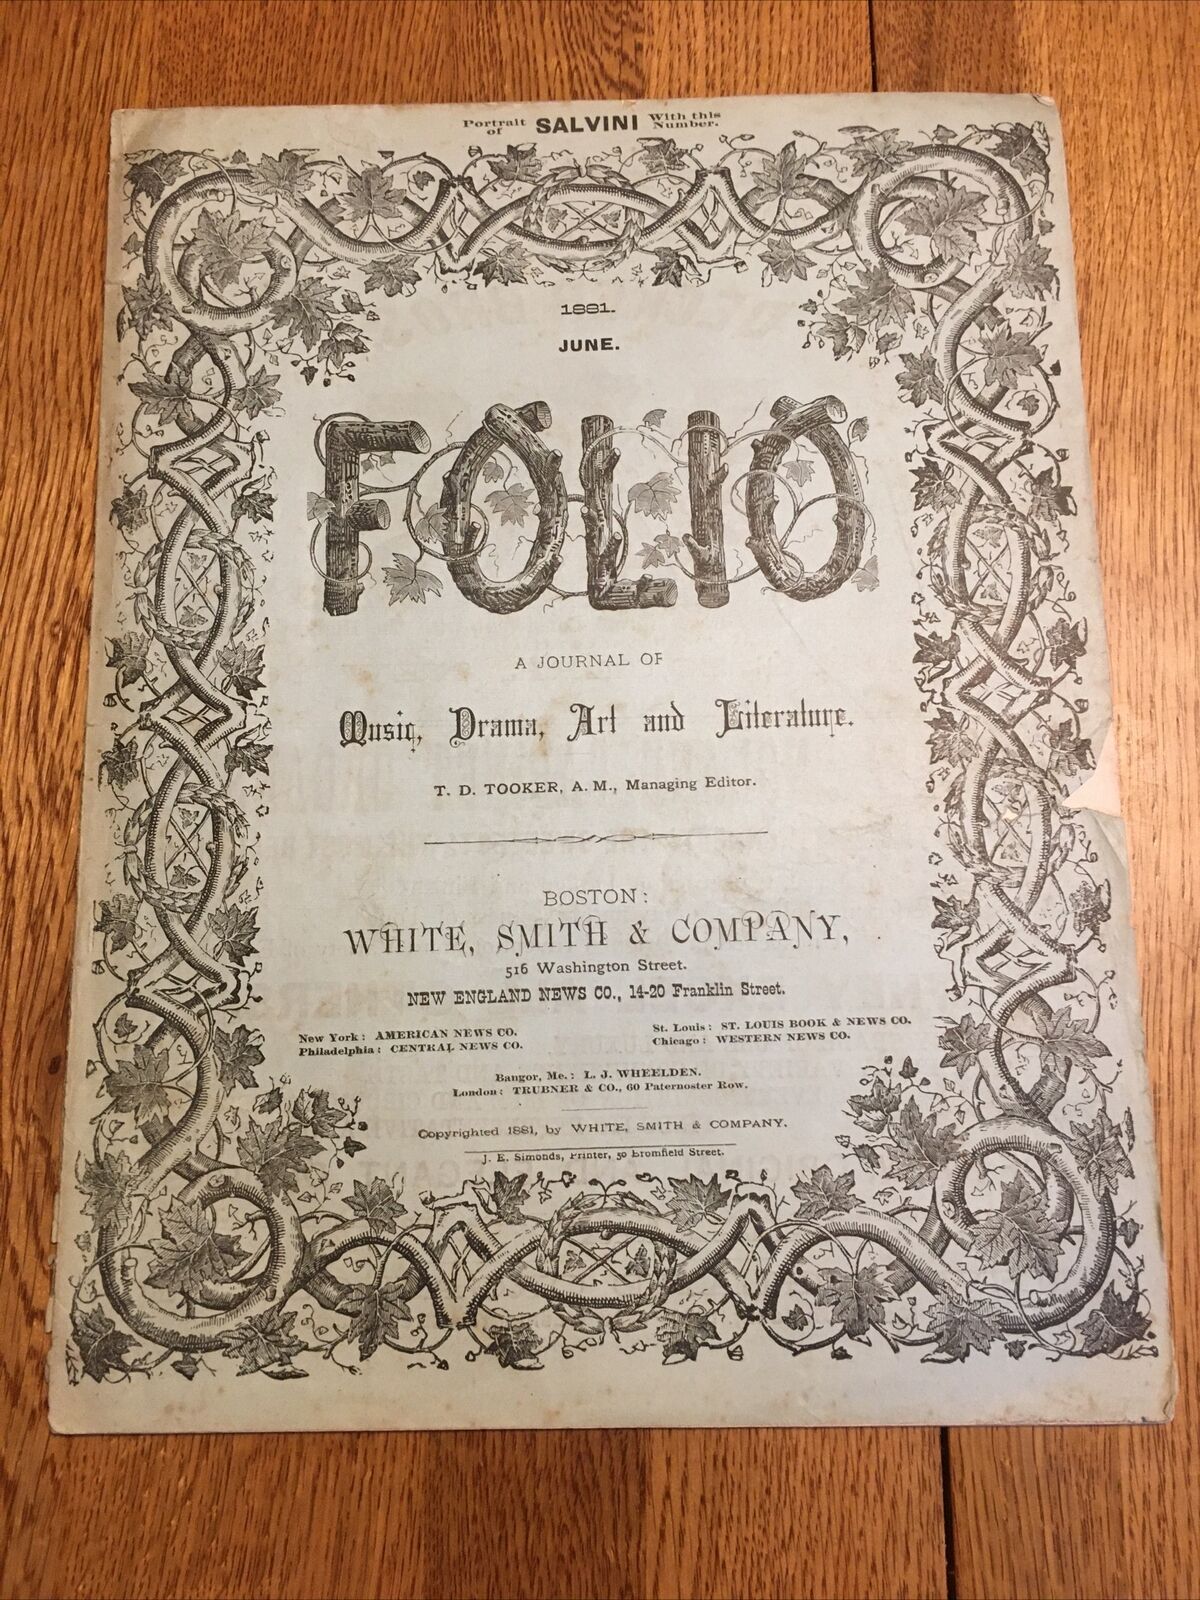 FOLIO. Monthly Magazine, June  1881. fashions, Portrait Of SALVINI MUSIC , DRAM